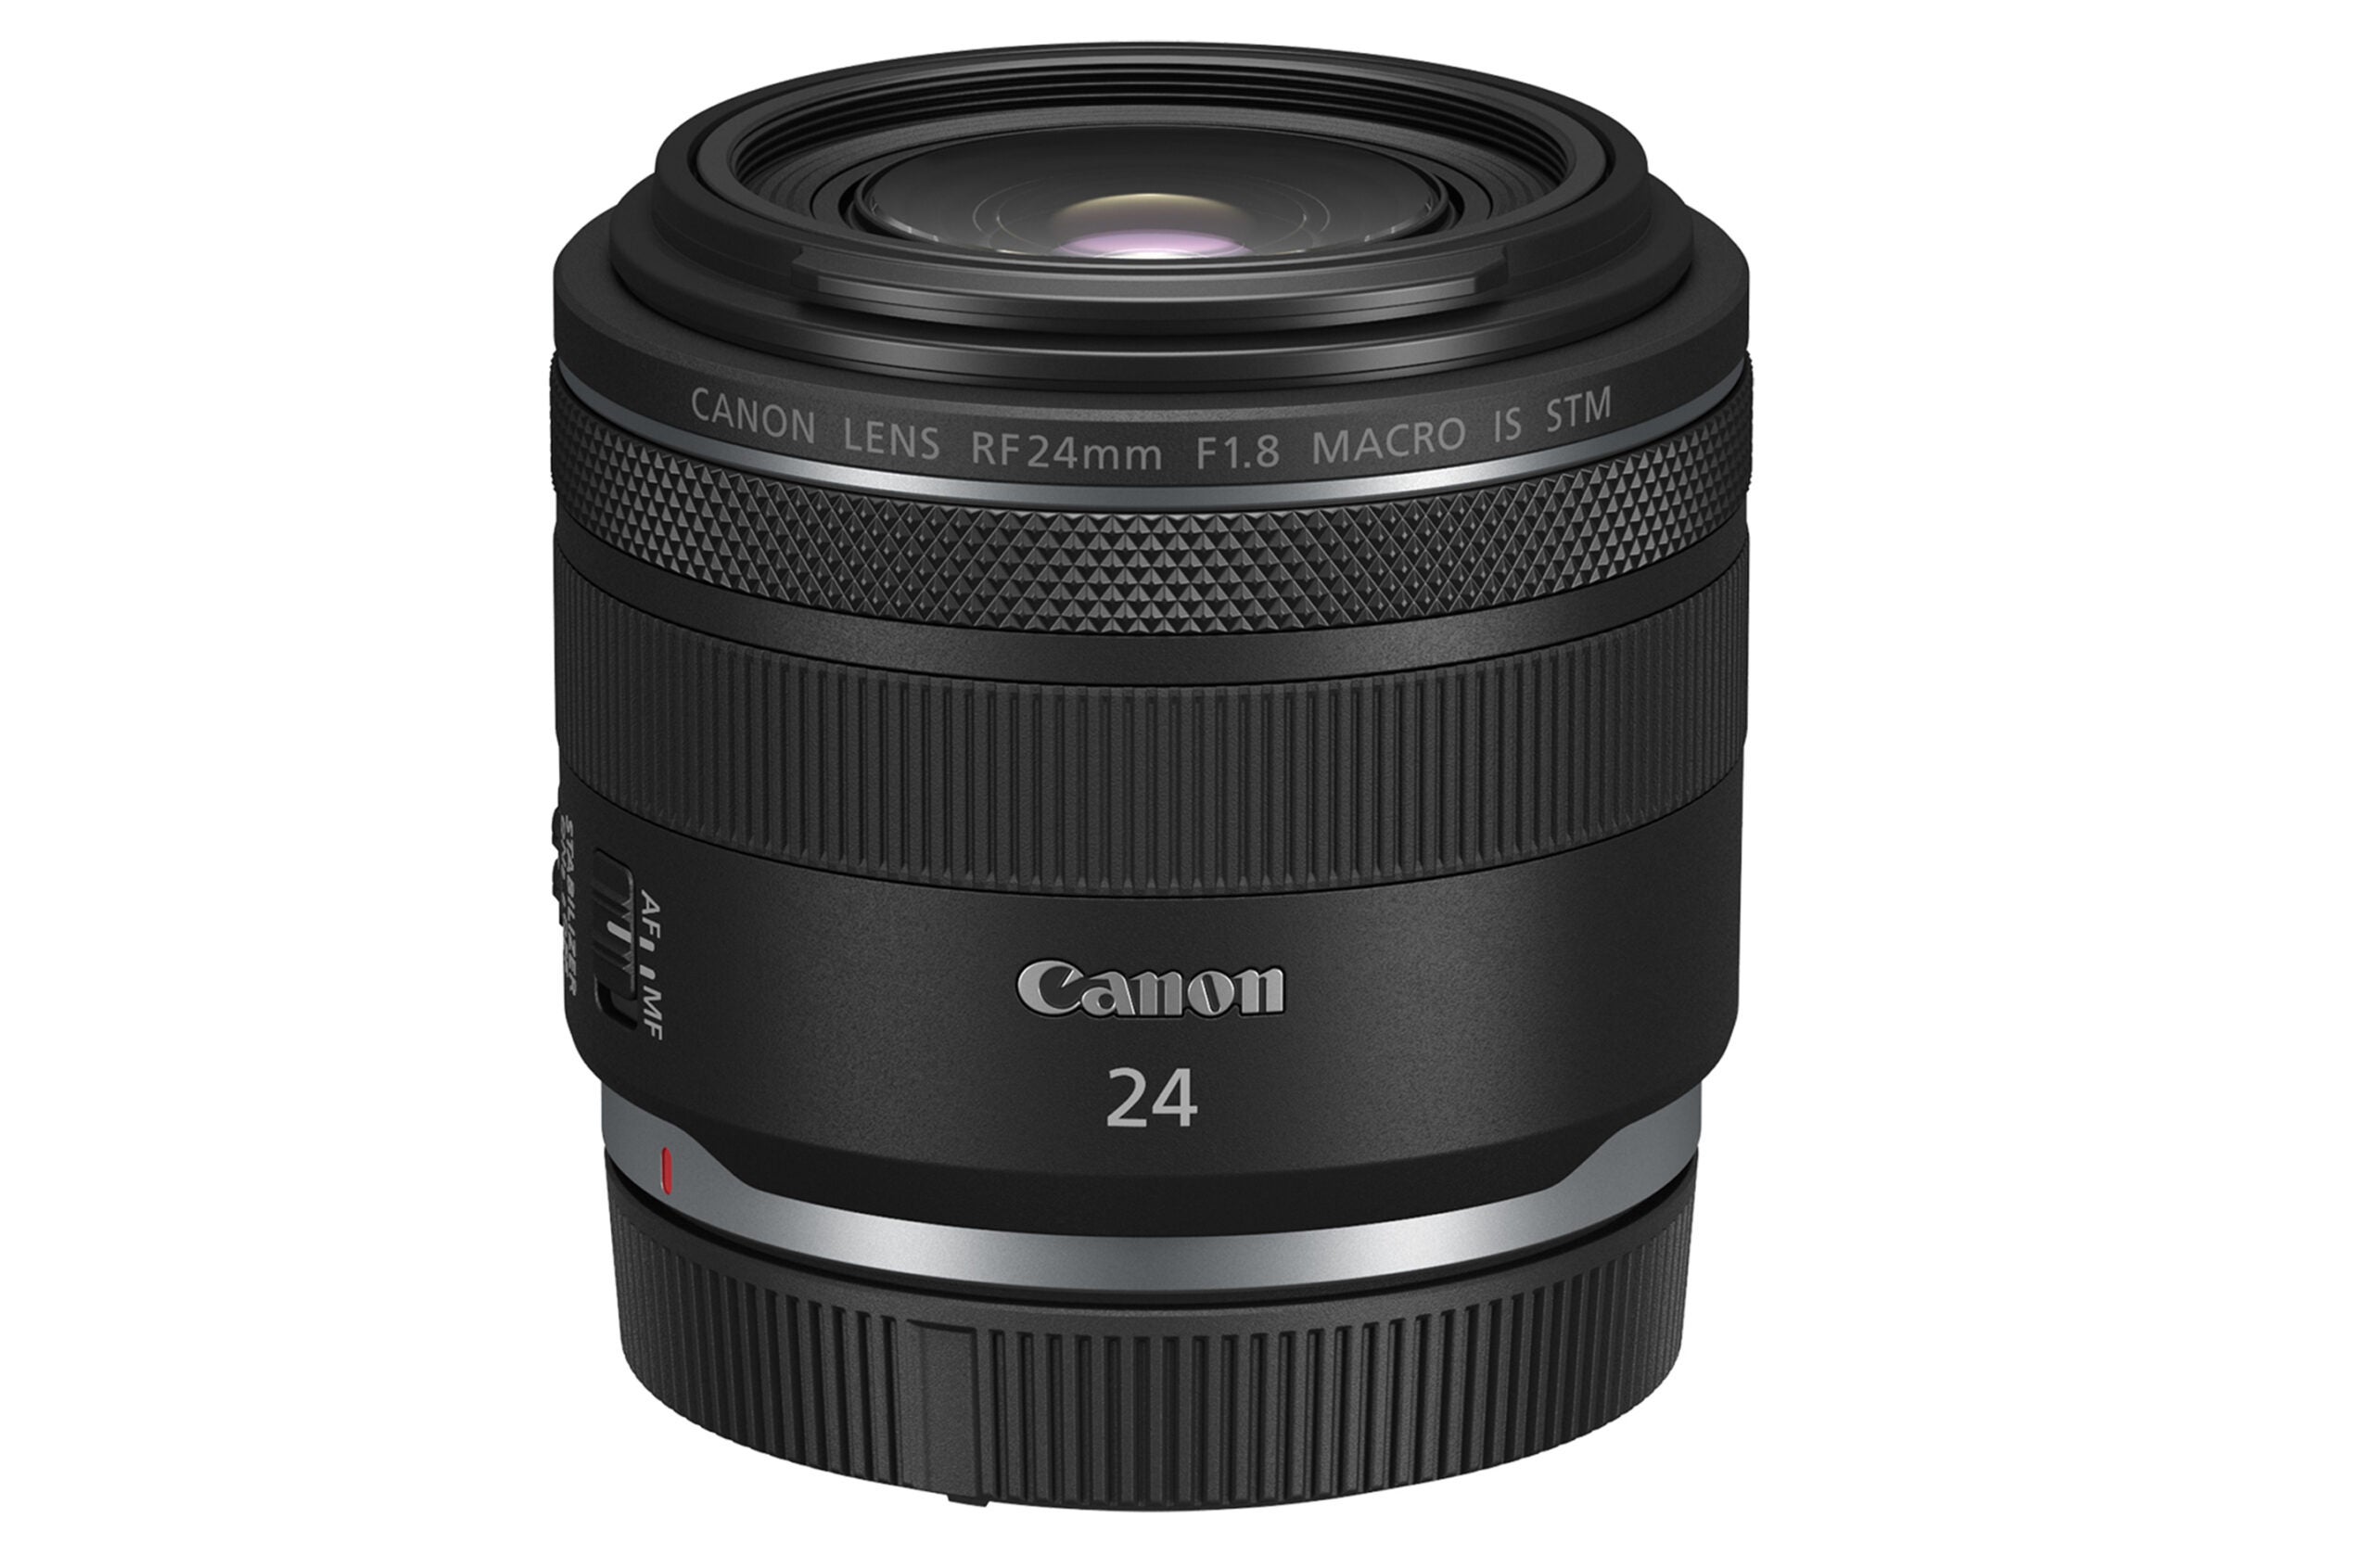 Canon's new RF 24mm f/1.8